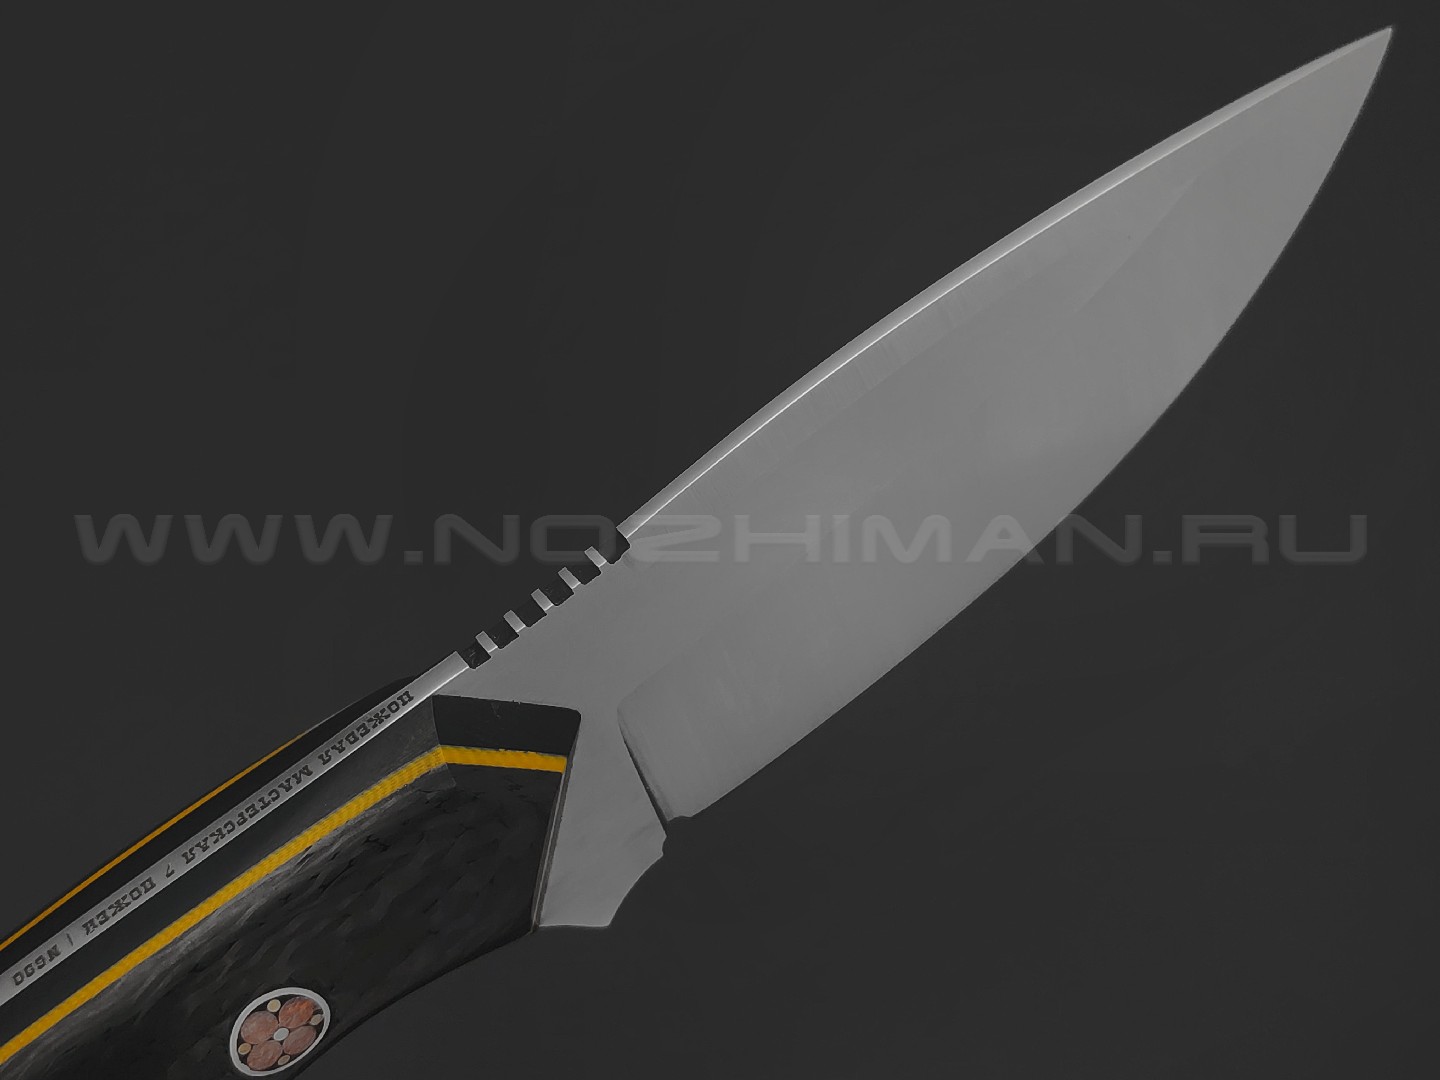 7 ножей нож Пиранья сталь N690 satin, рукоять Carbon fiber, G10 black & yellow